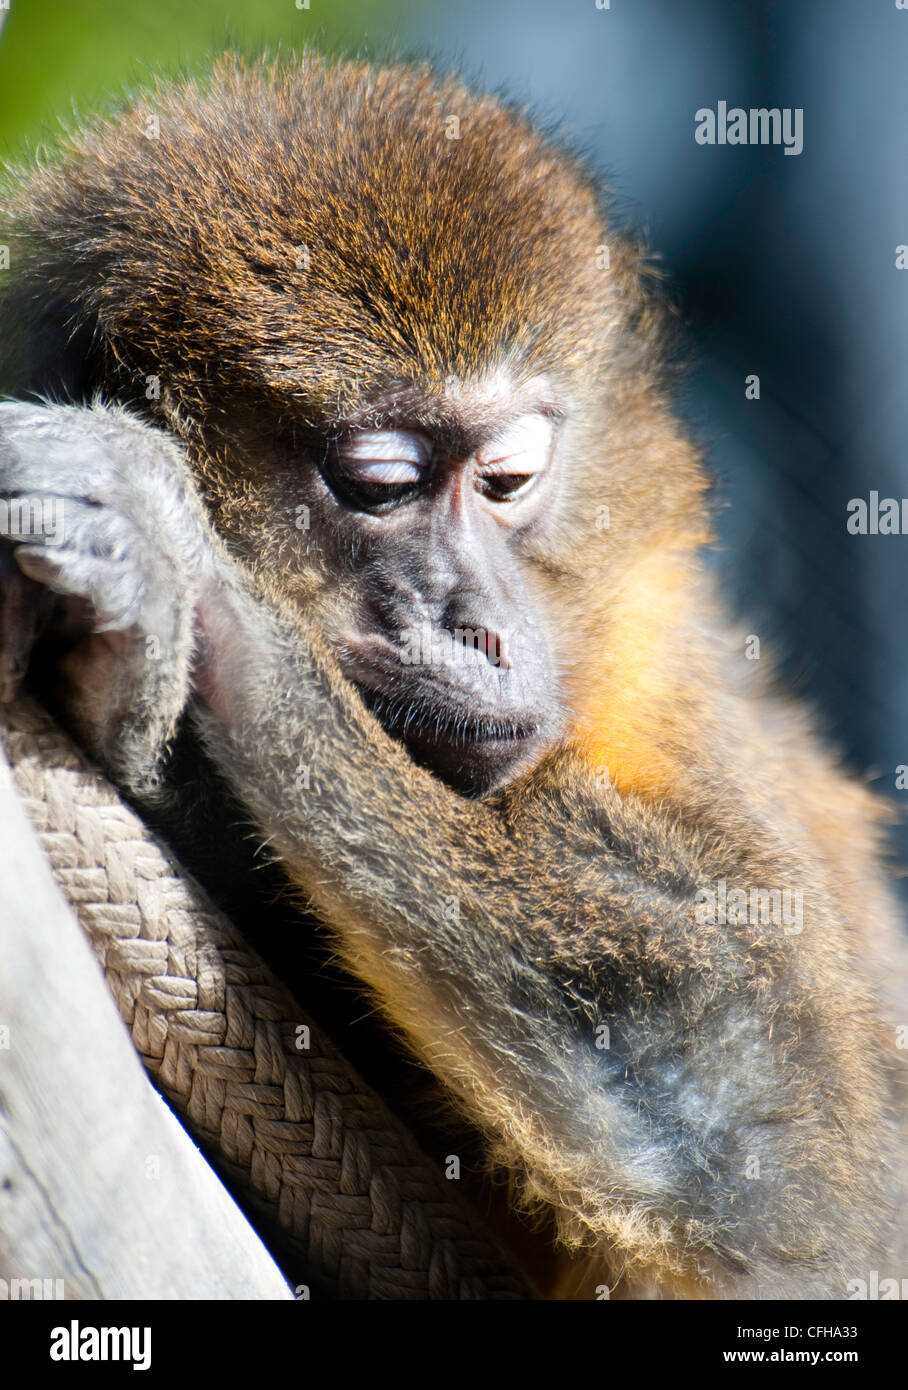 monkey in zoo Stock Photo